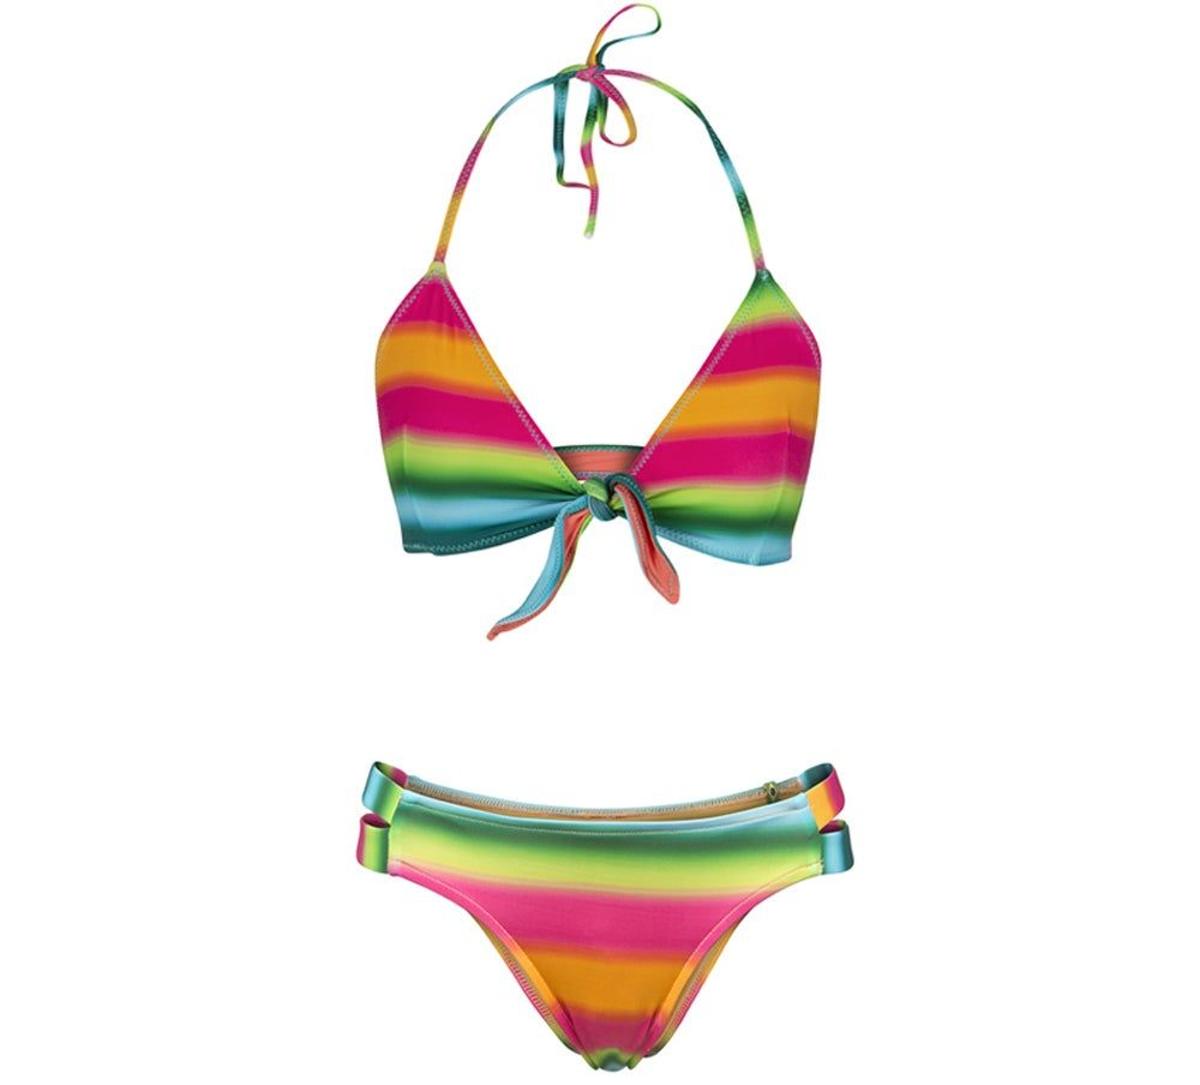 Bikini arcoiris de Havaianas (Precio: top 29,90 euros y braguita 27,90 euros)